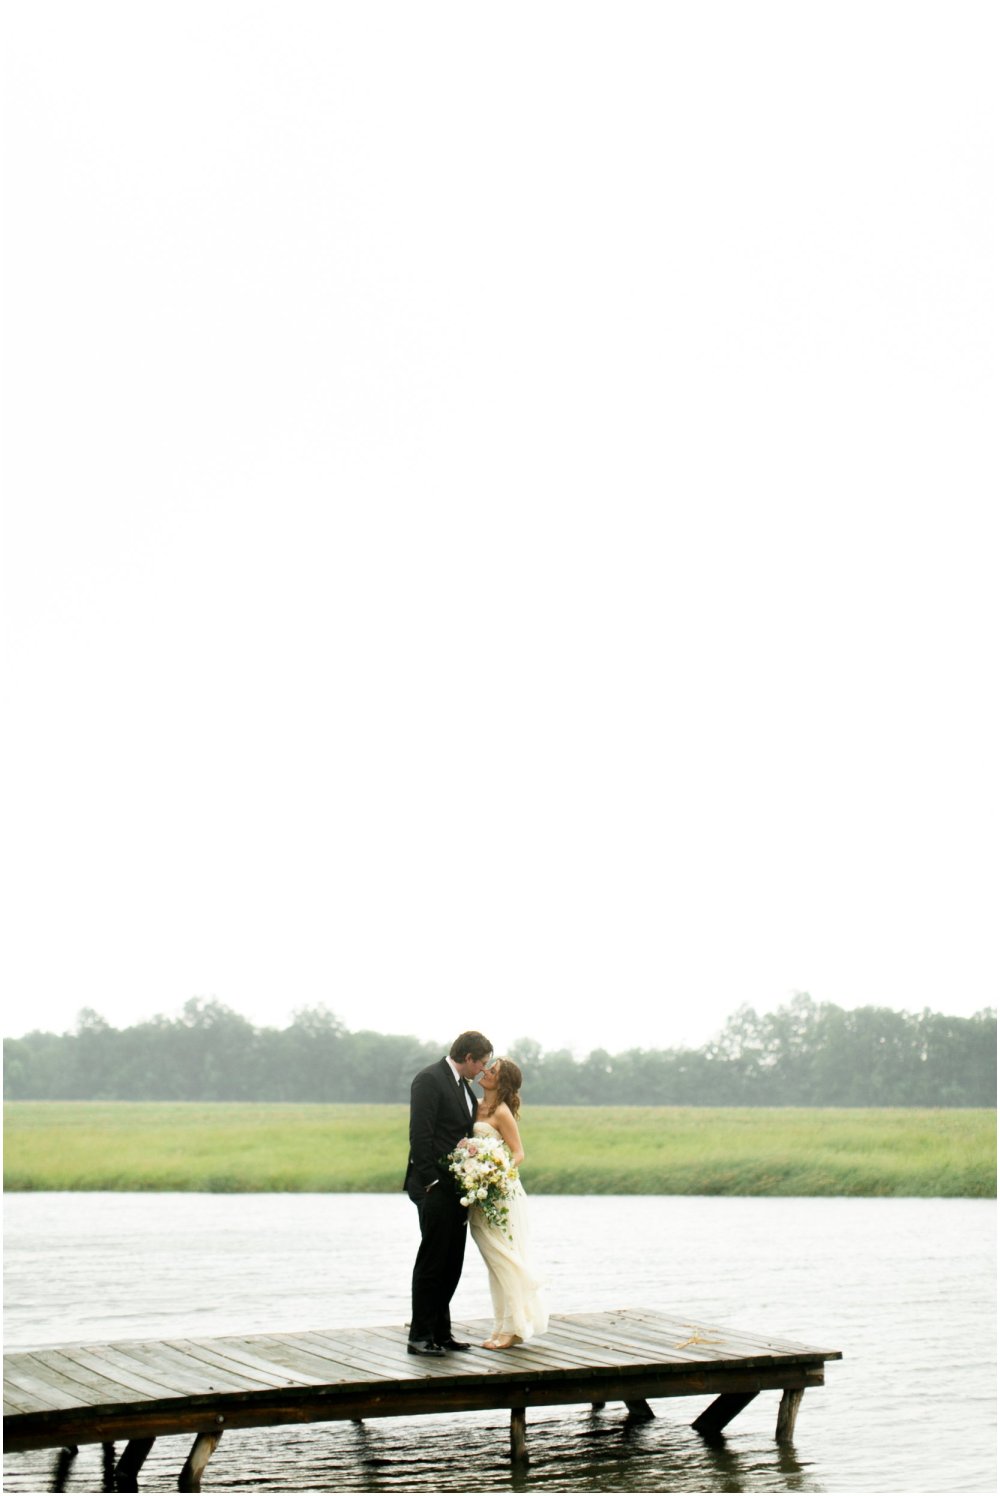 Allison + Brad's Romantic Rainy Day Wedding | Alea Lovely Fine Art Photography